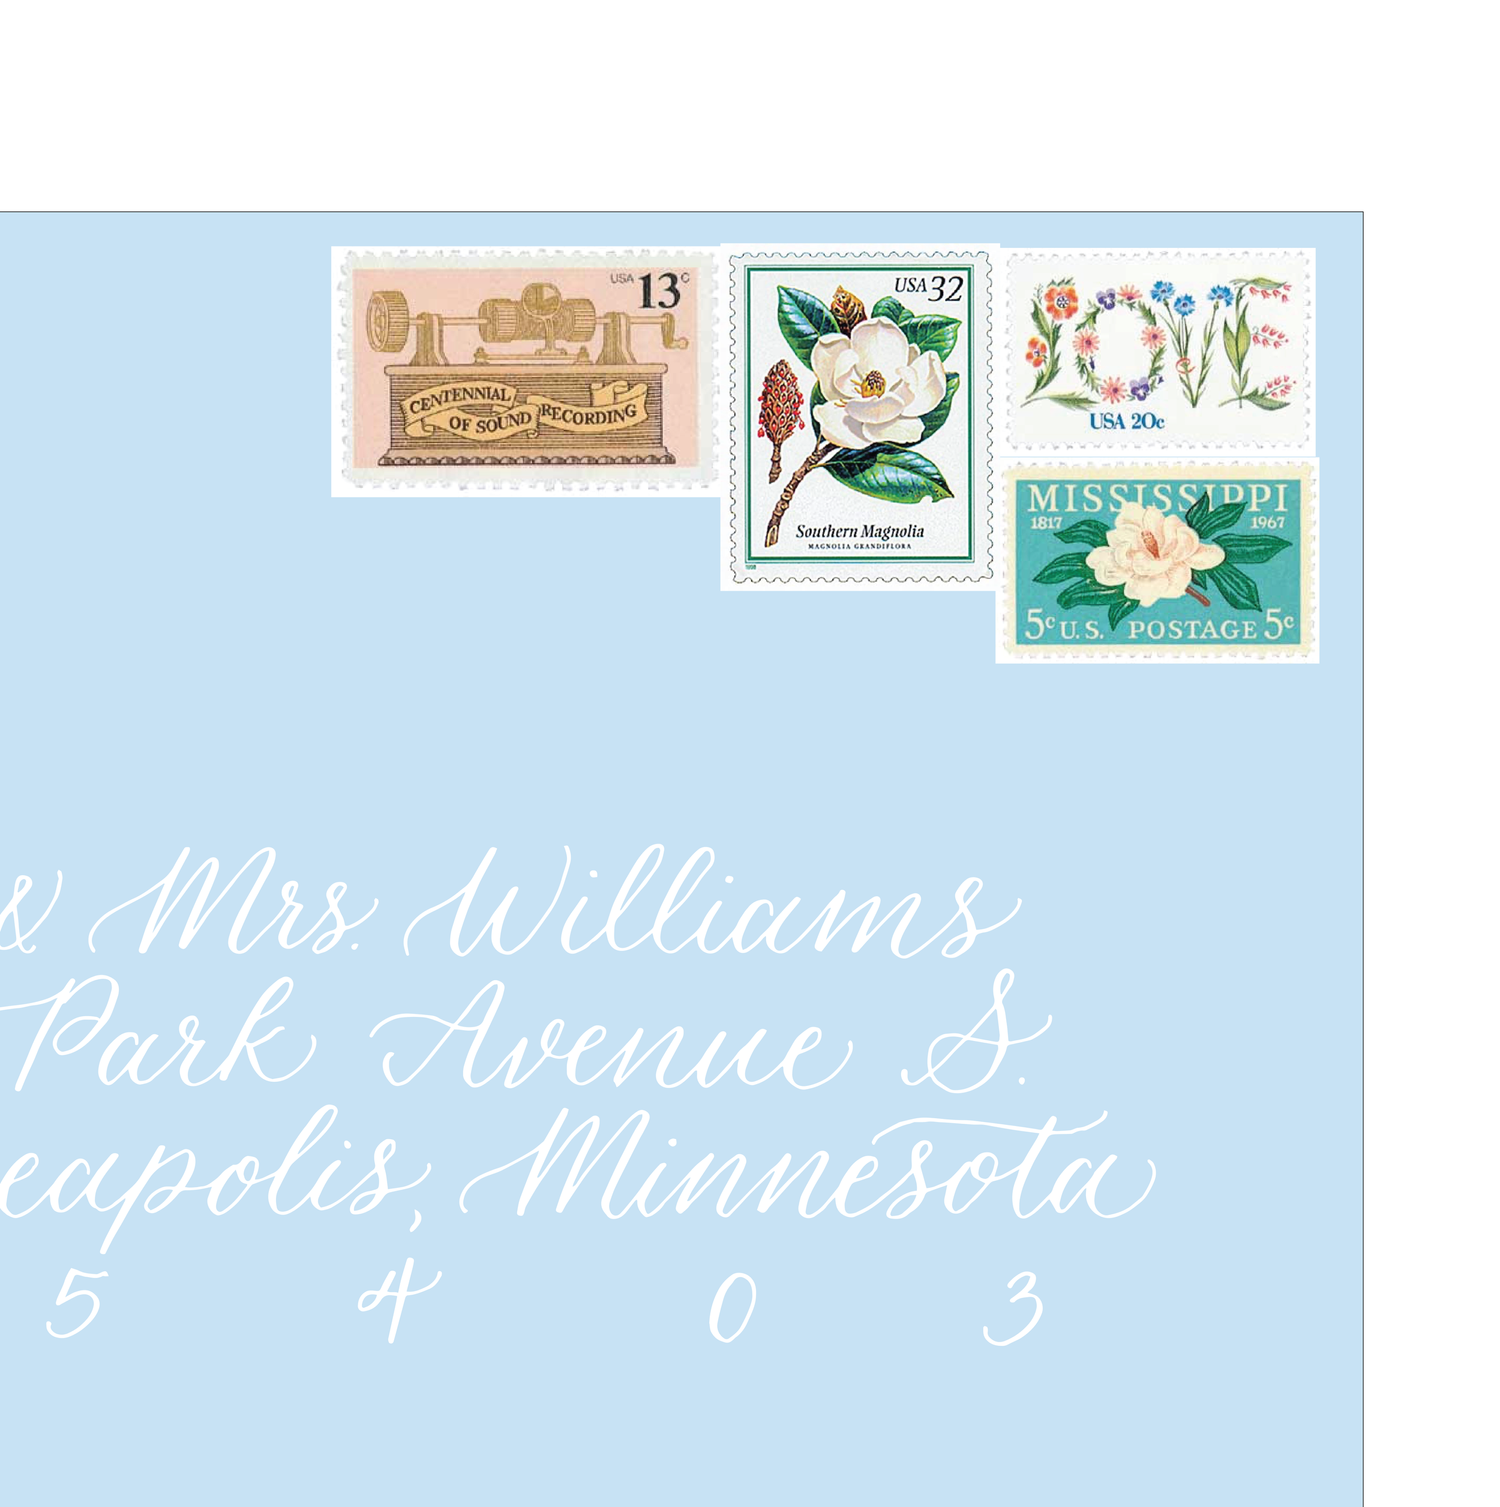 Vintage american postcard background post stamp Used paper